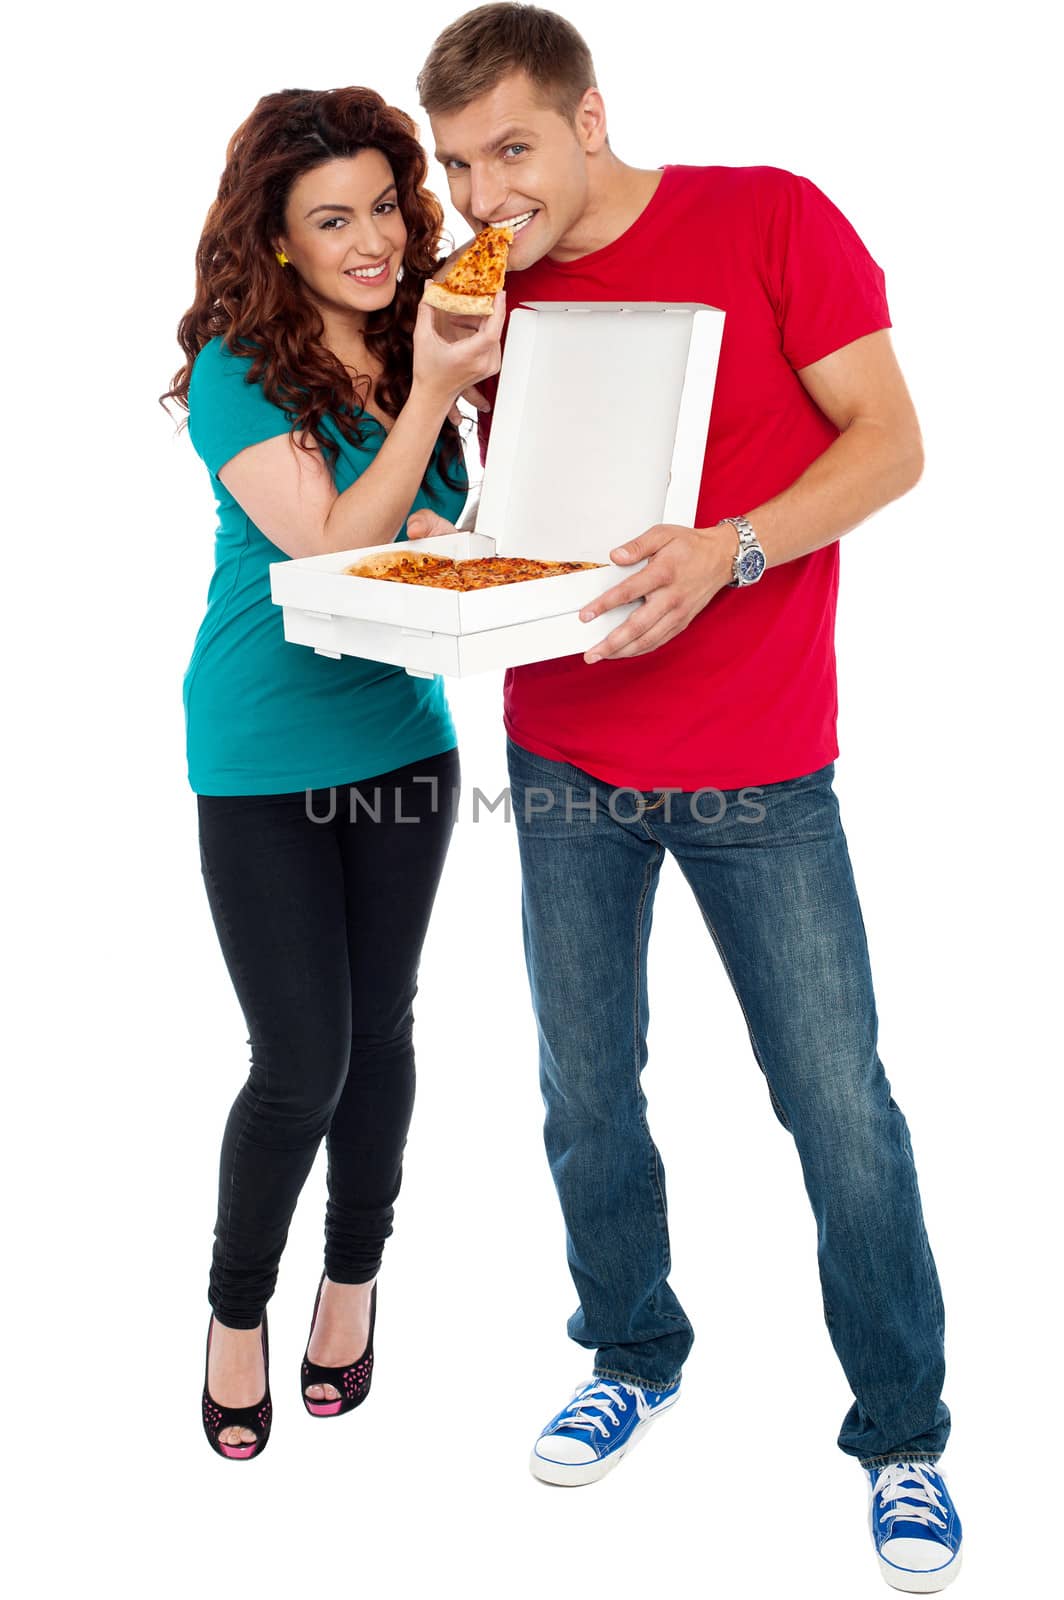 Couple enjoying pizza together, great bonding. Full length shots